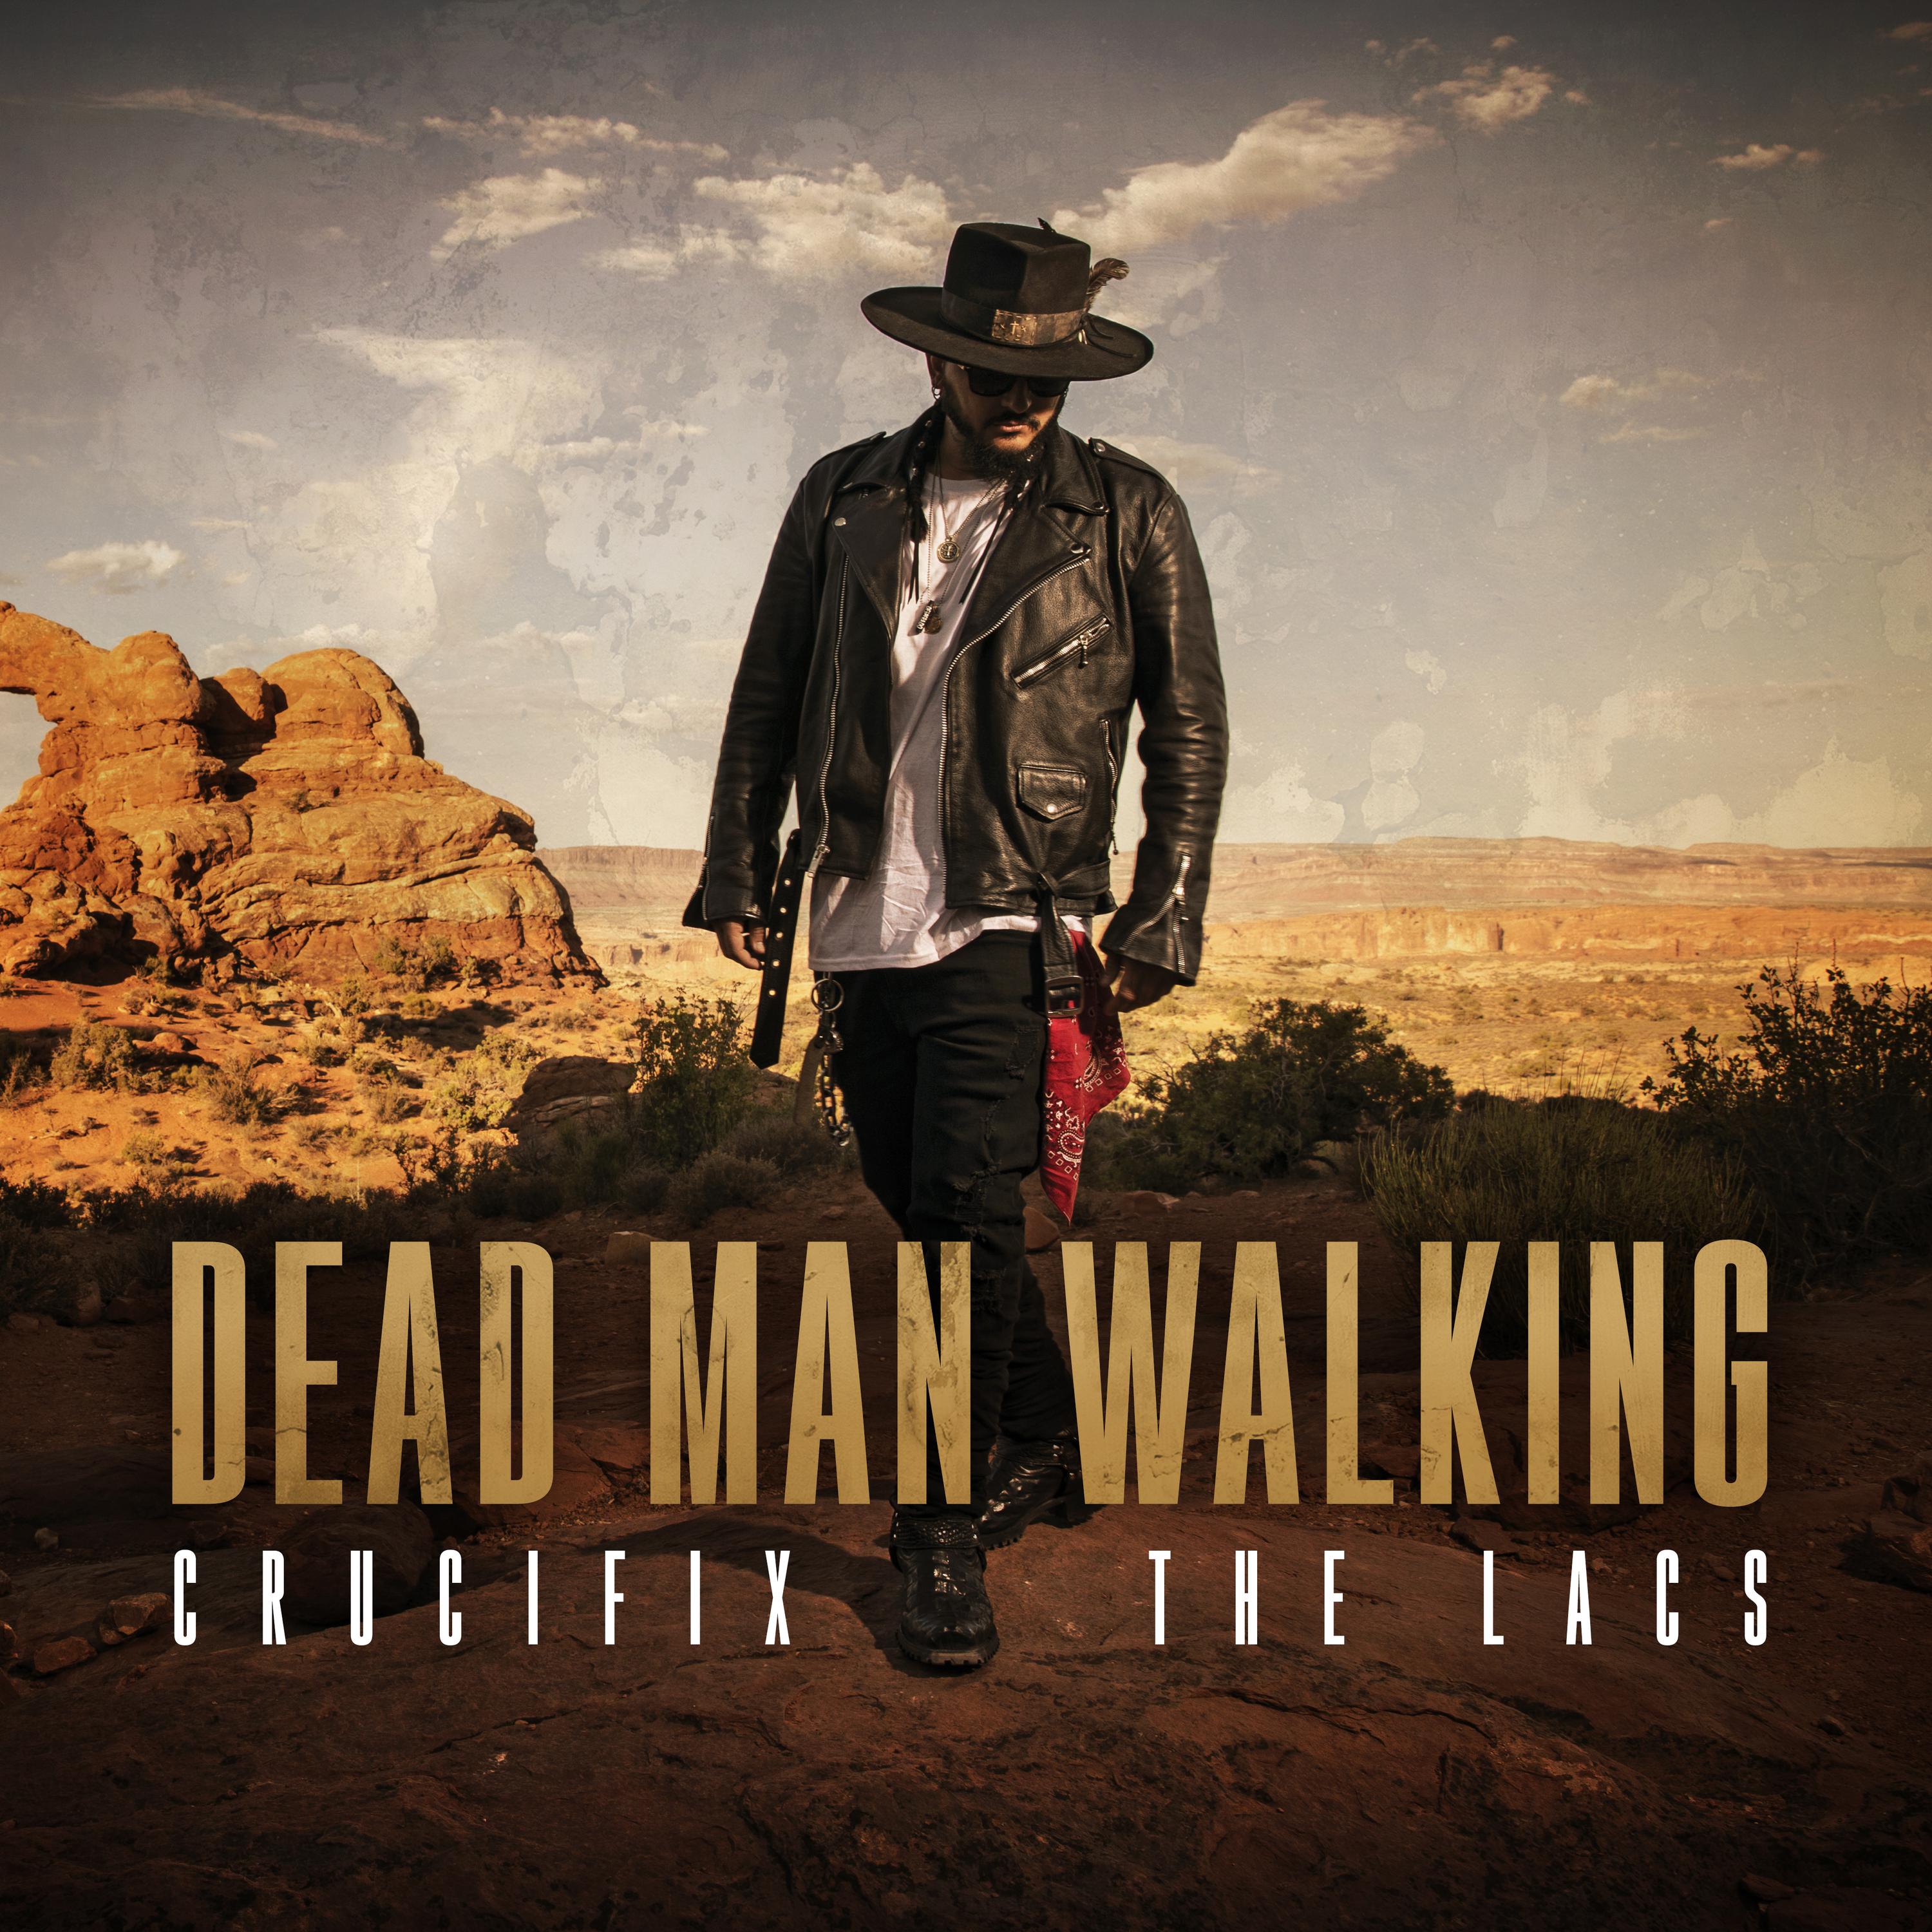 Crucifix - Dead Man Walking (feat. The Lacs)